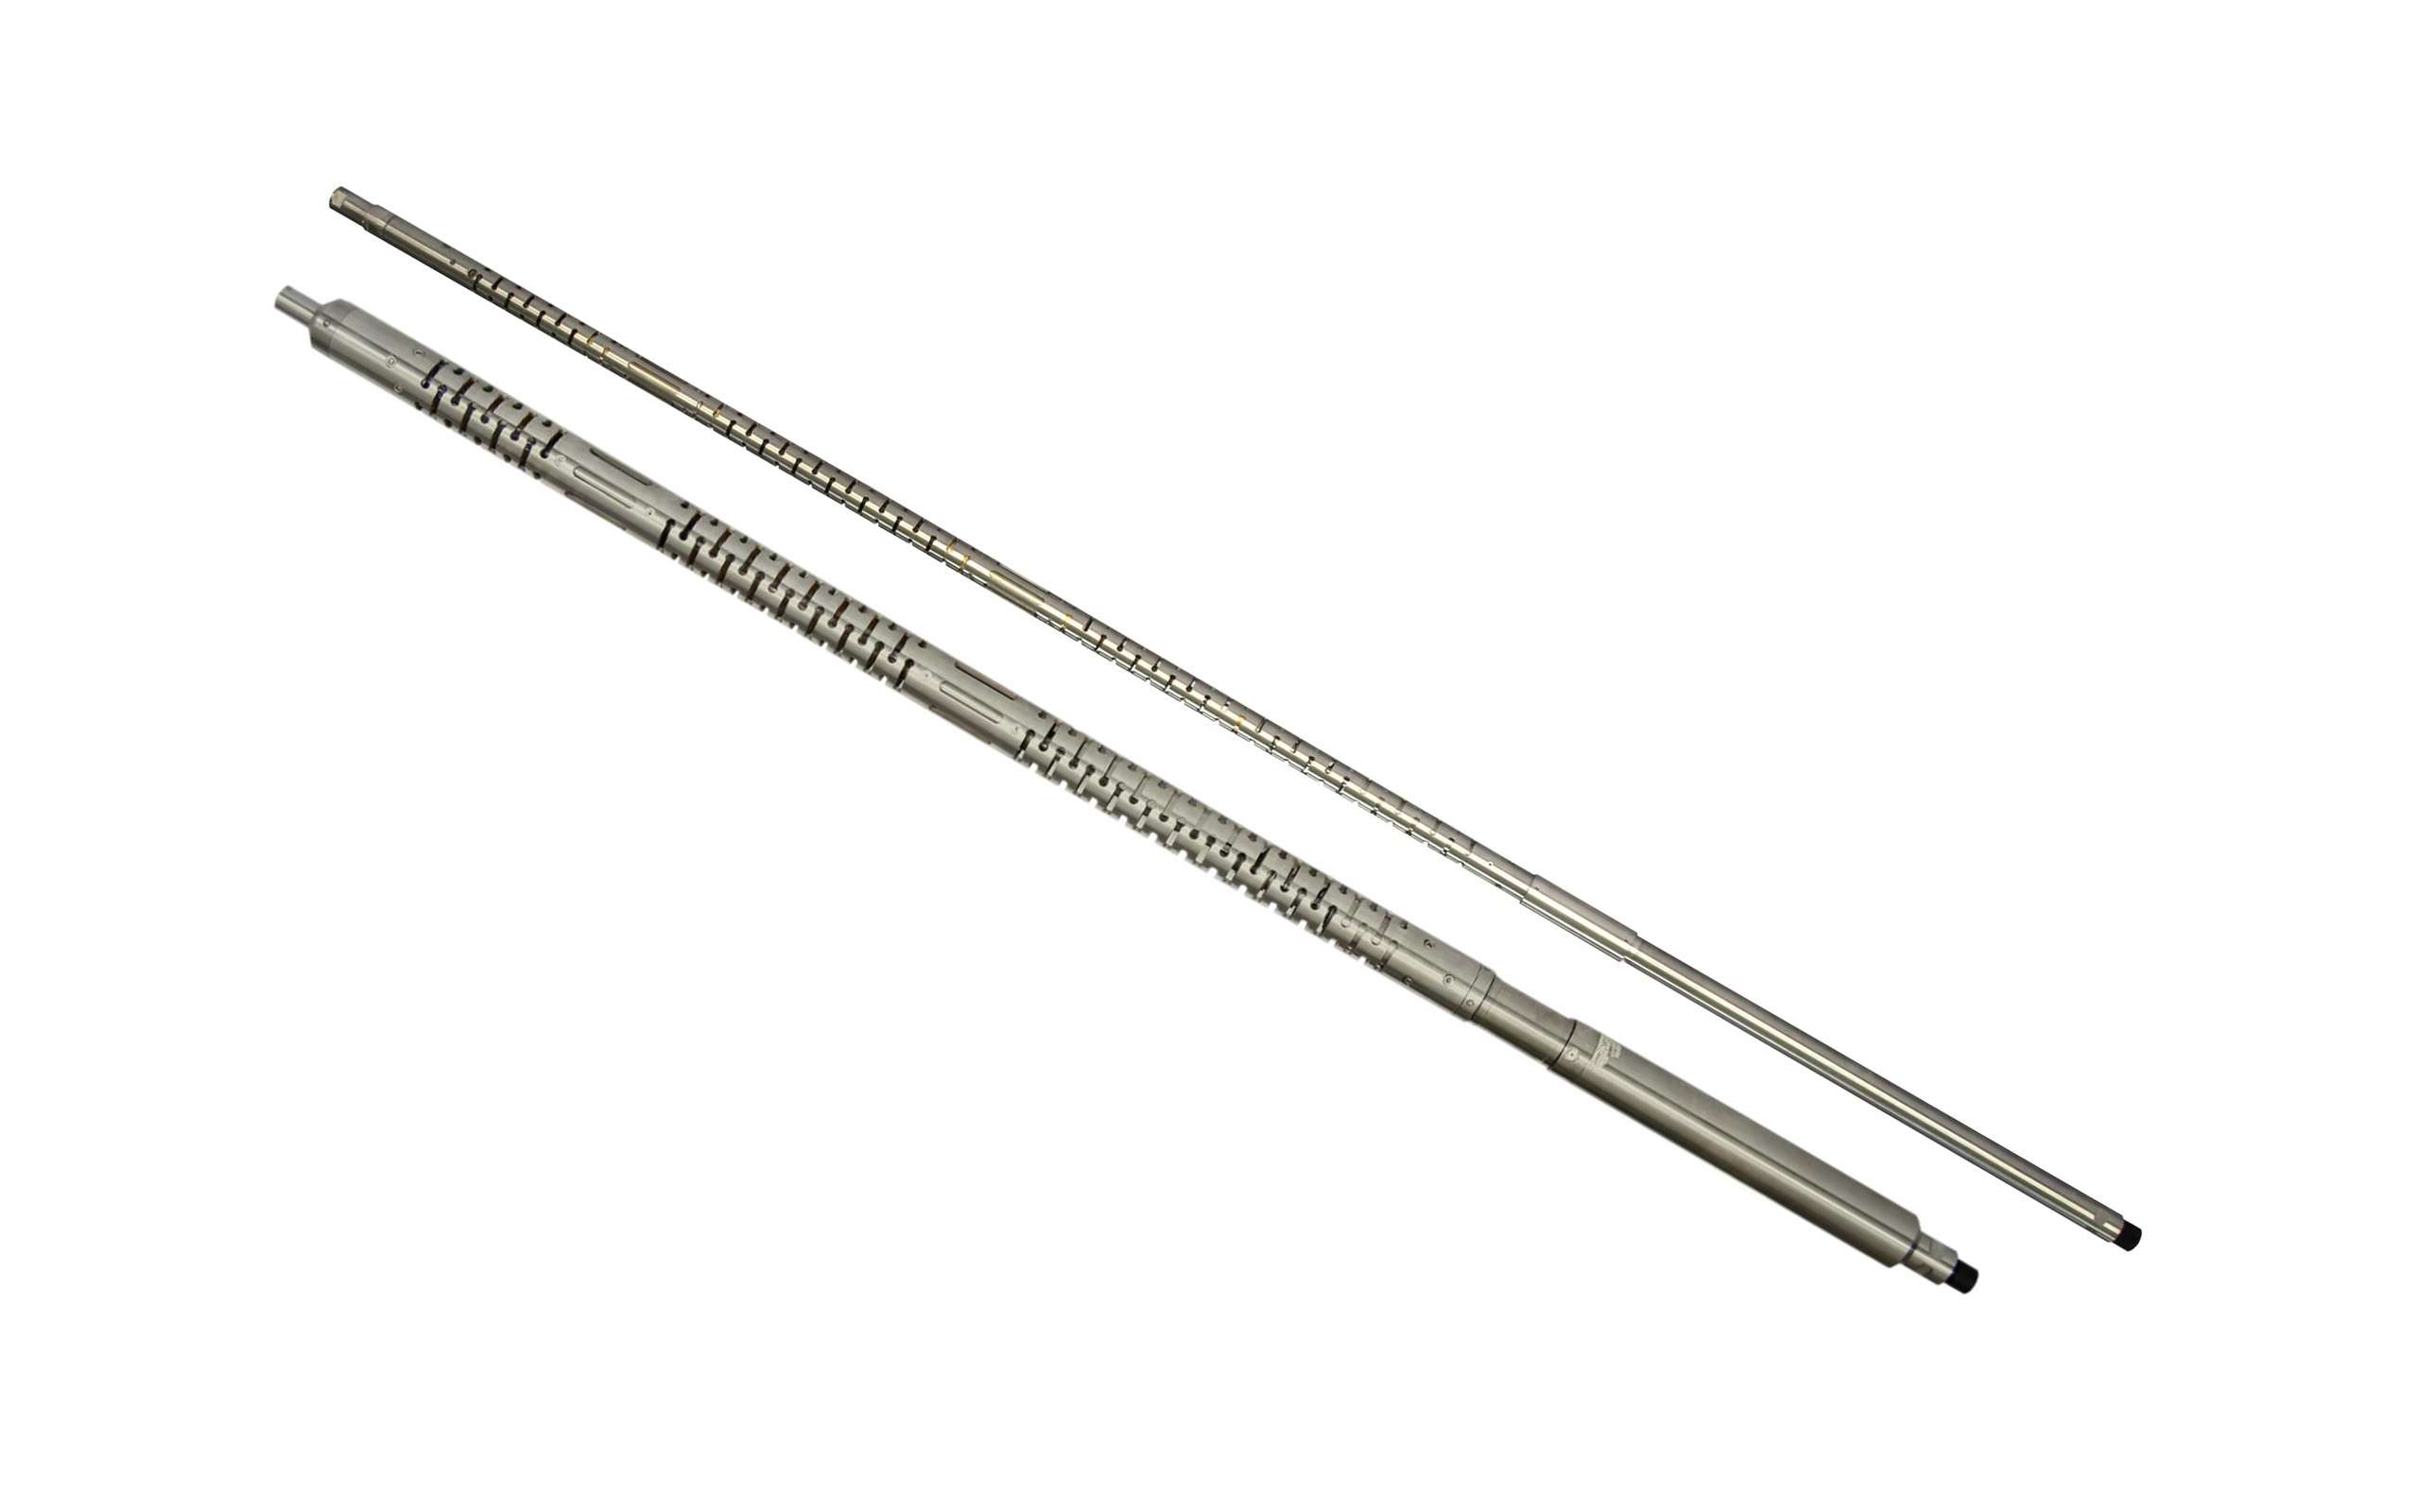 RBT-Radial Bond Tools - long metal rods